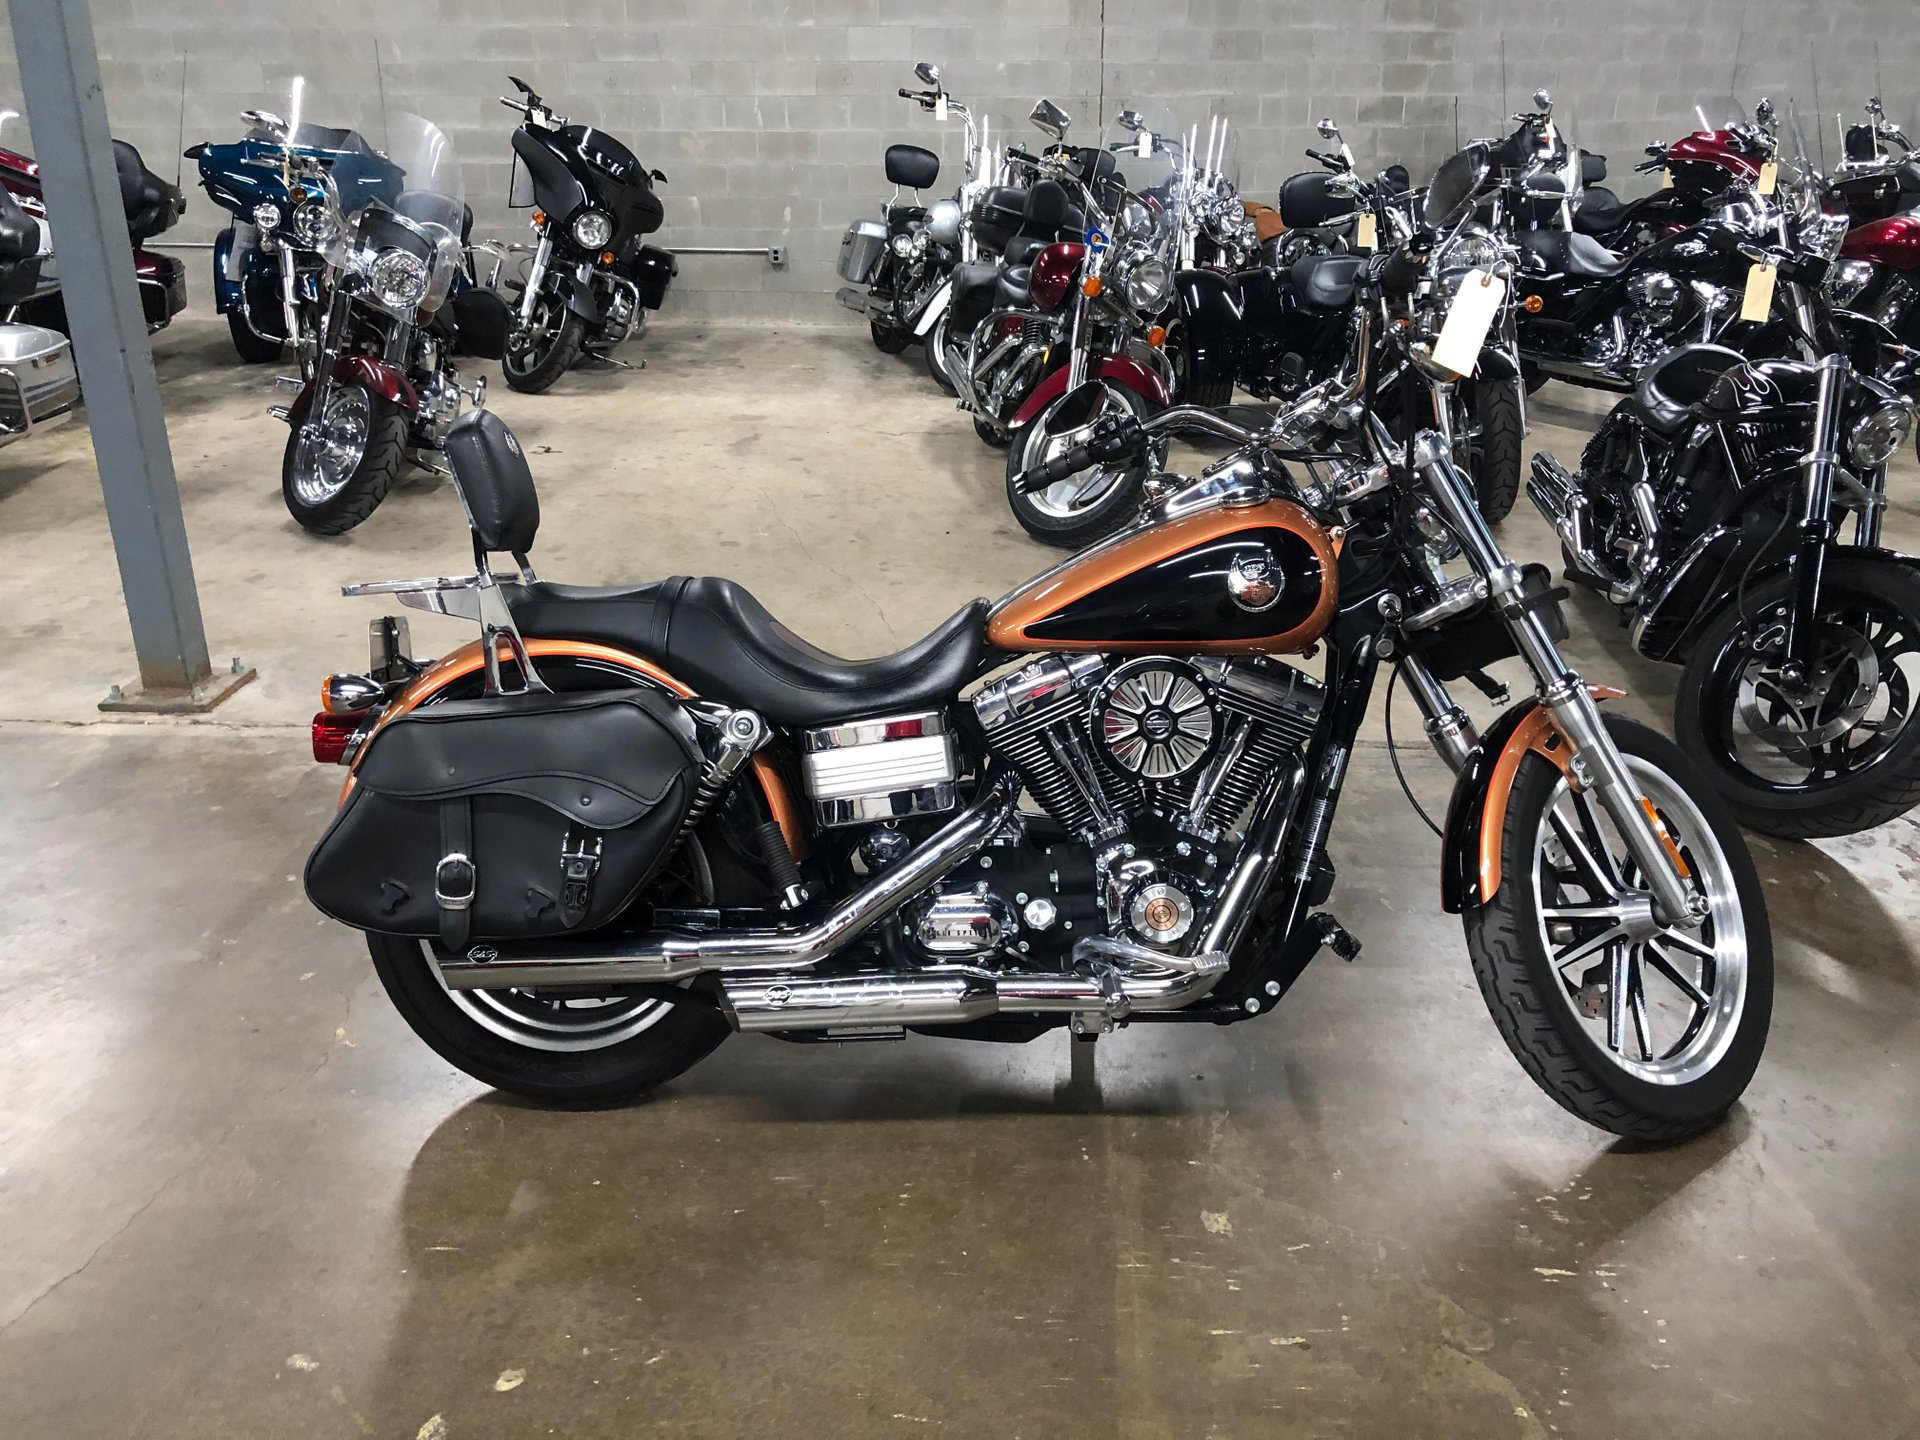 2008 Harley-Davidson Dyna Low Rider | American Motorcycle Trading Company -  Used Harley Davidson Motorcycles